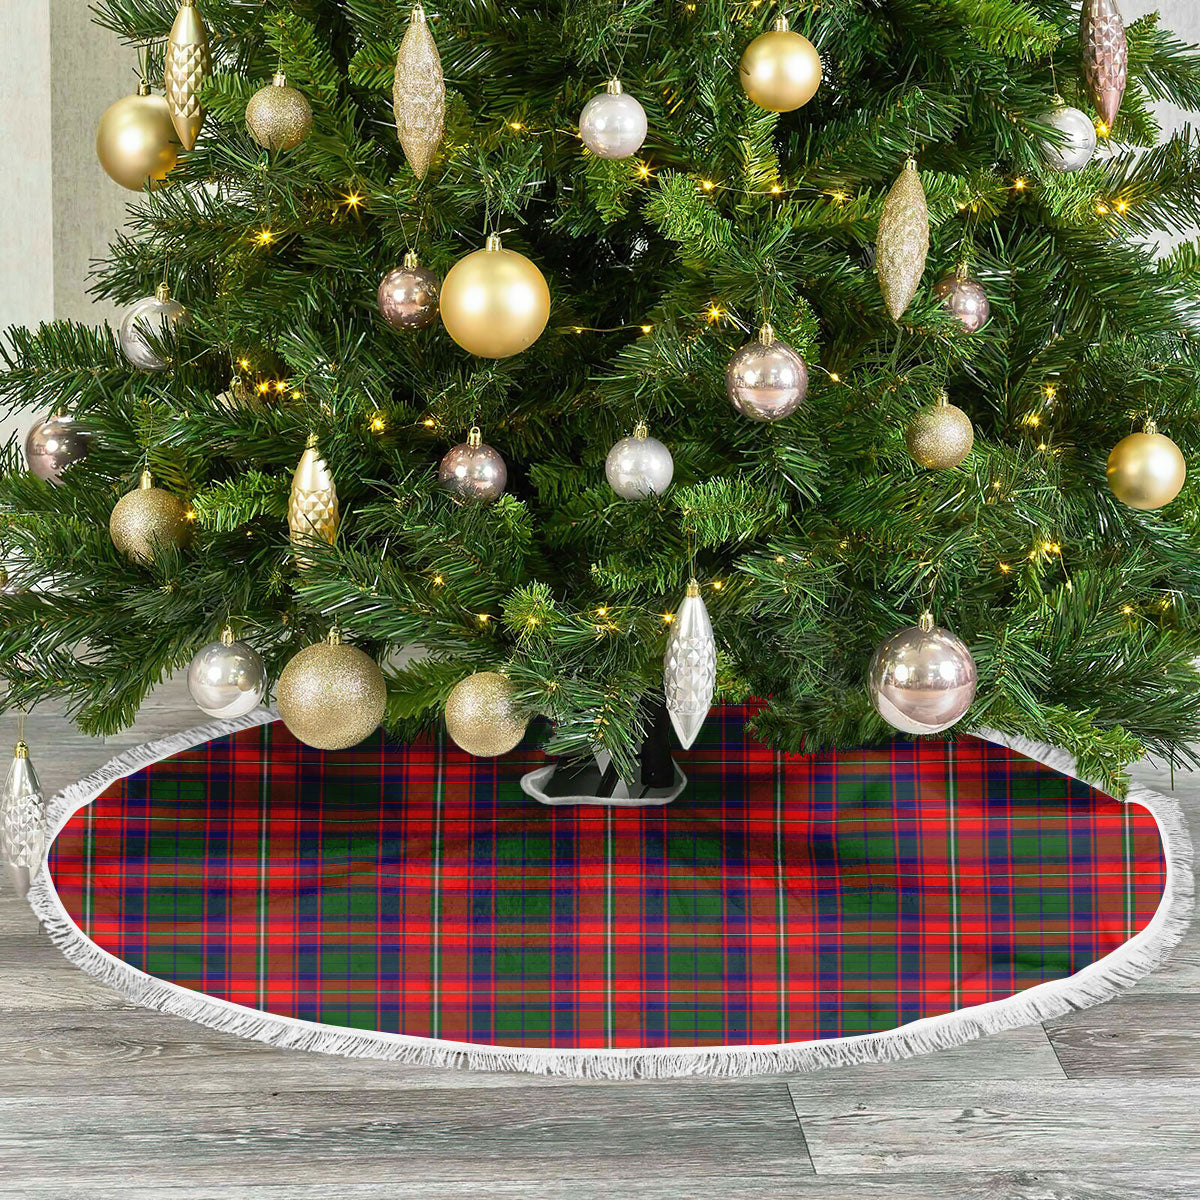 Wauchope (or Waugh) Tartan Christmas Tree Skirt